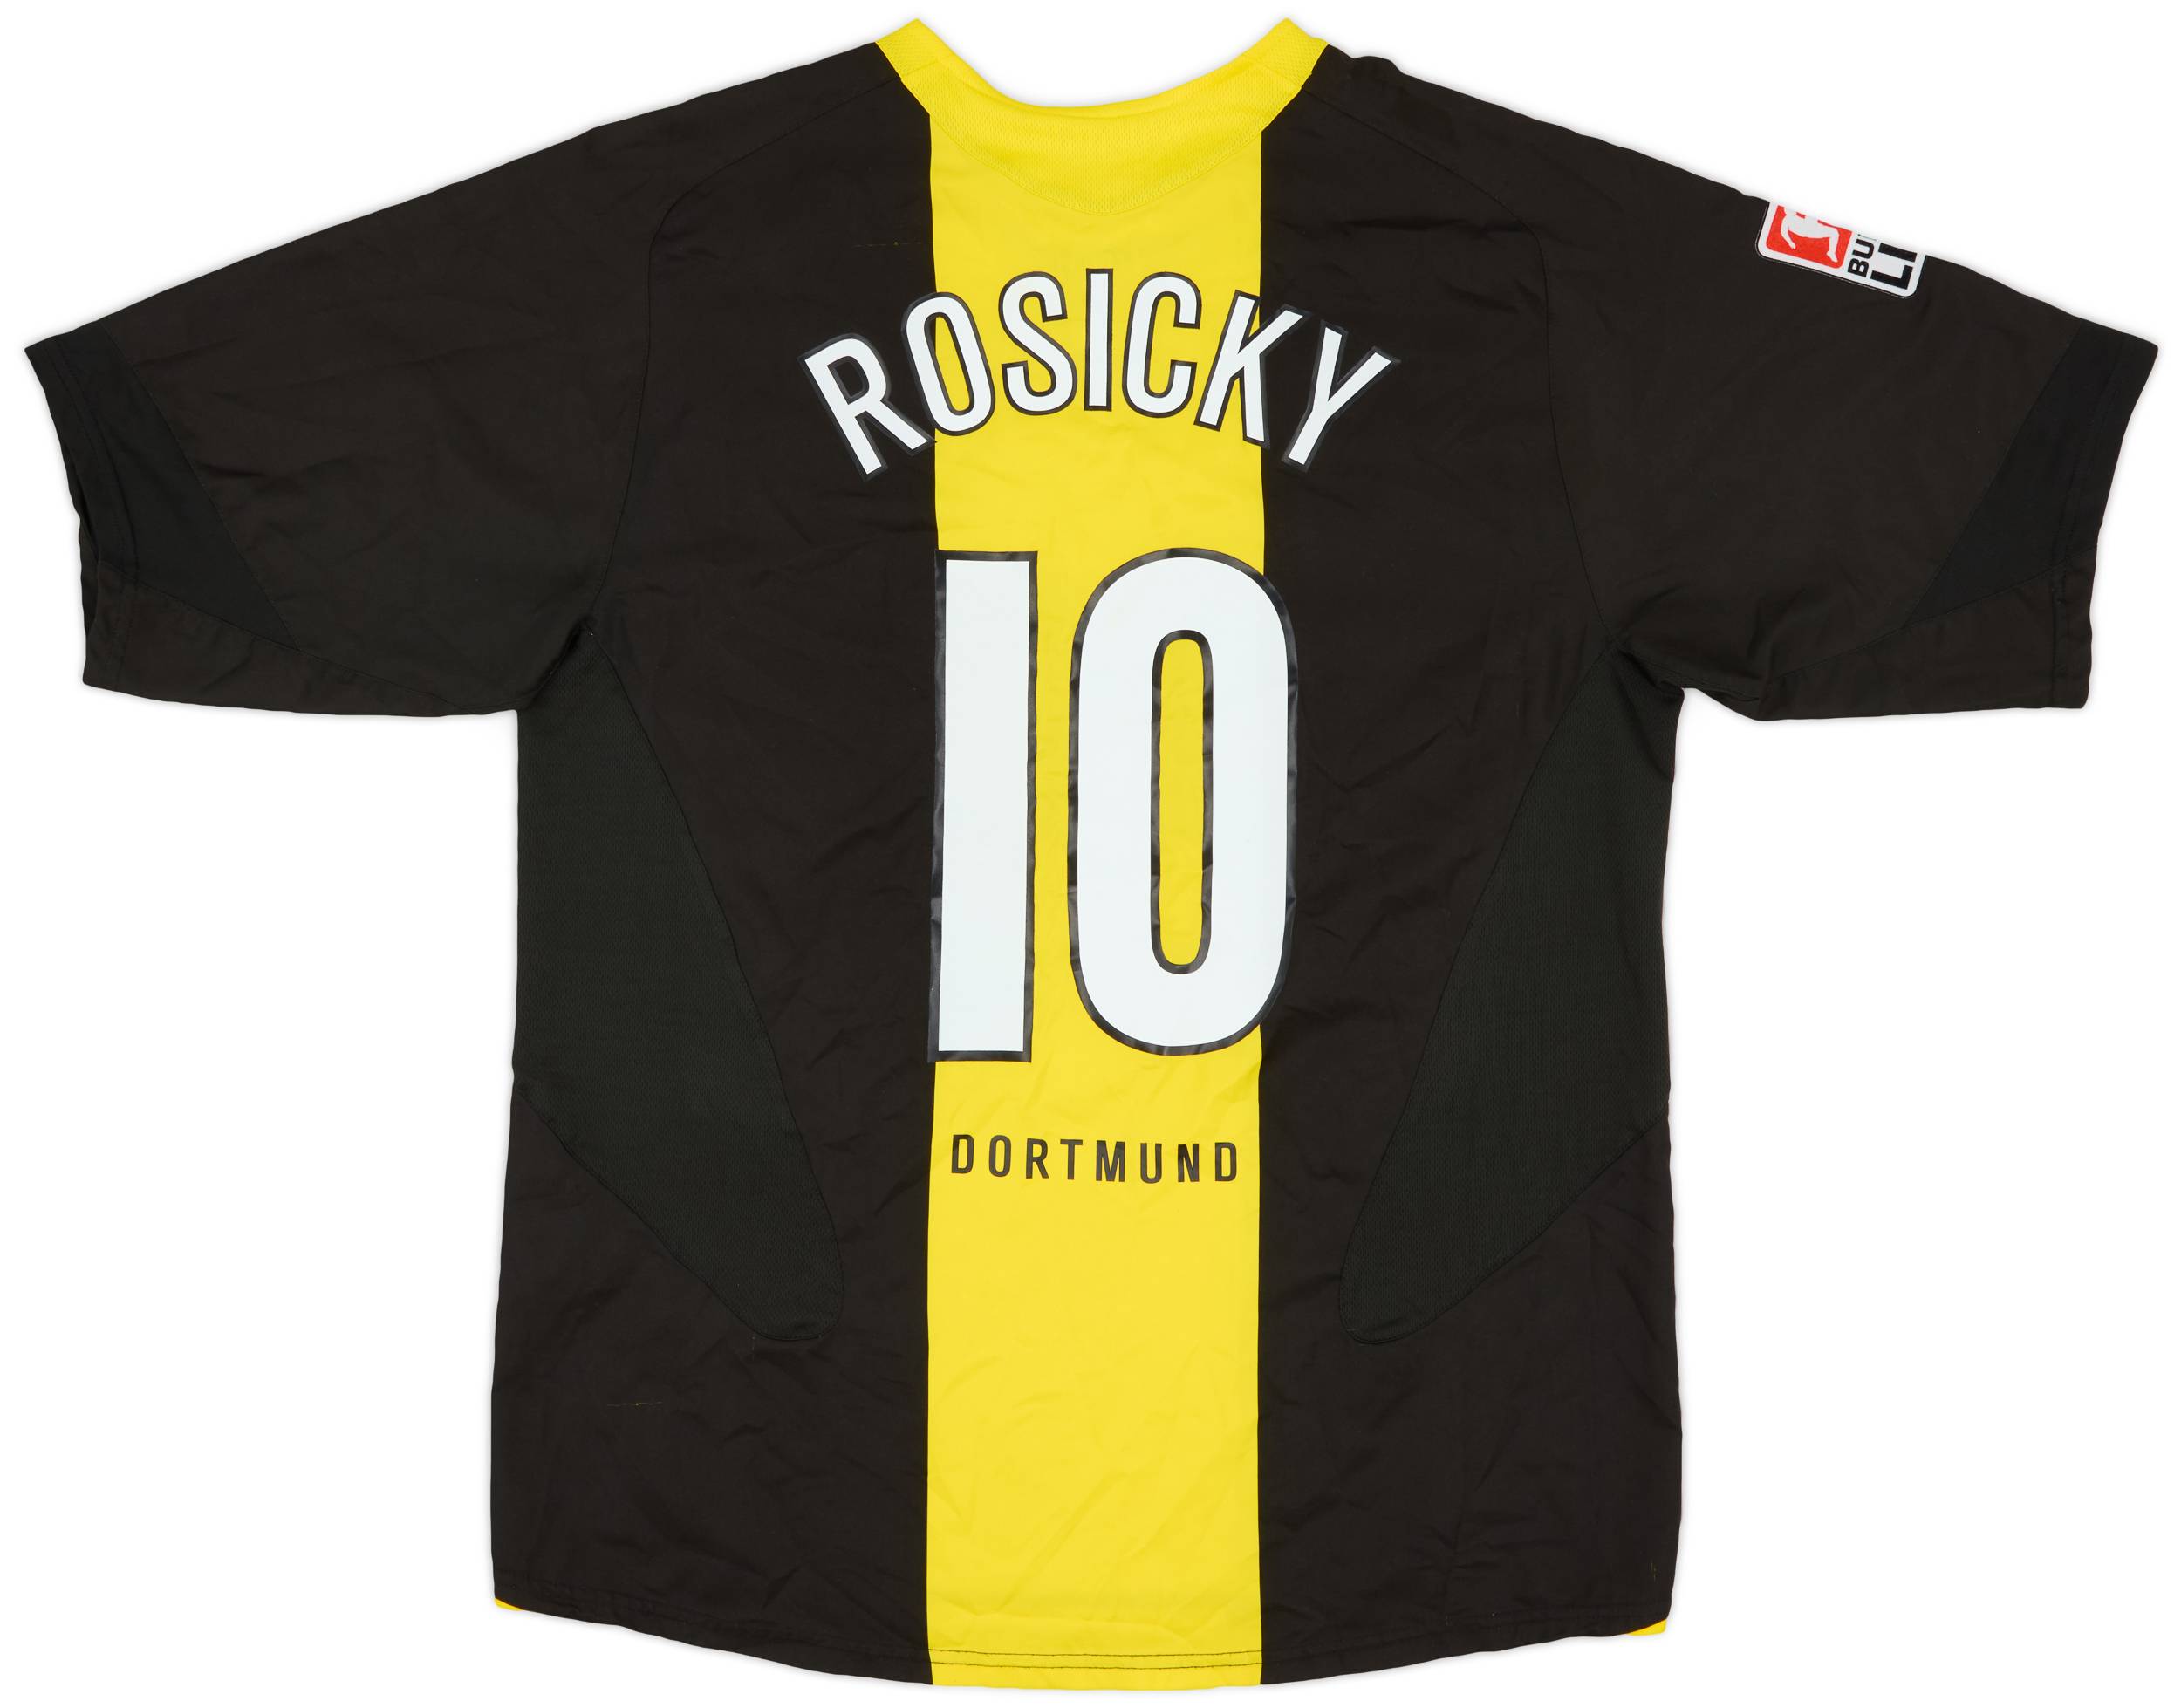 2005-06 Borussia Dortmund Away Shirt Rosicky #10 - 5/10 - (L)